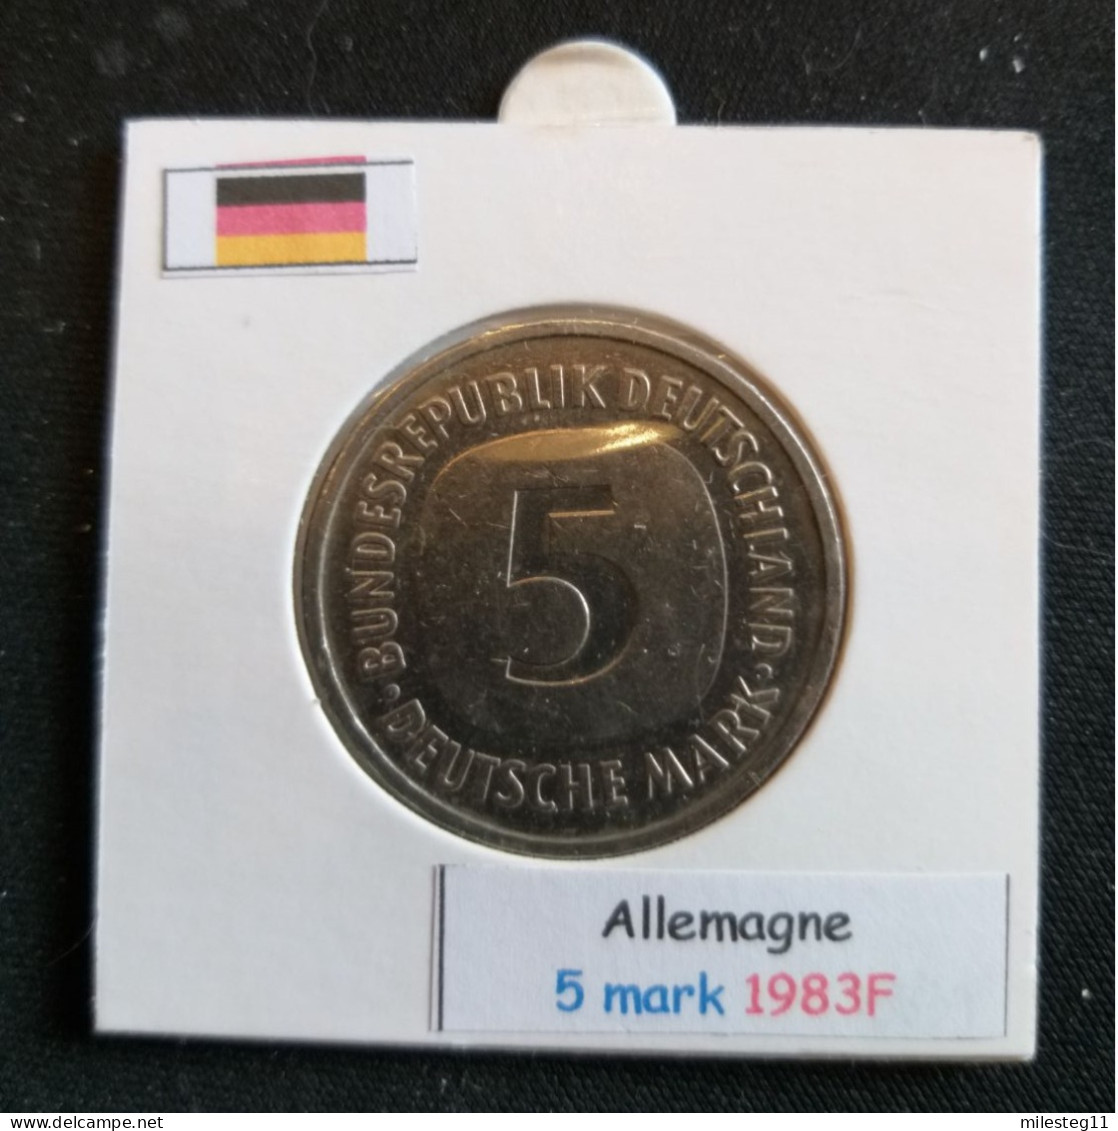 Allemagne 5 Mark 1983F Position A - 5 Mark